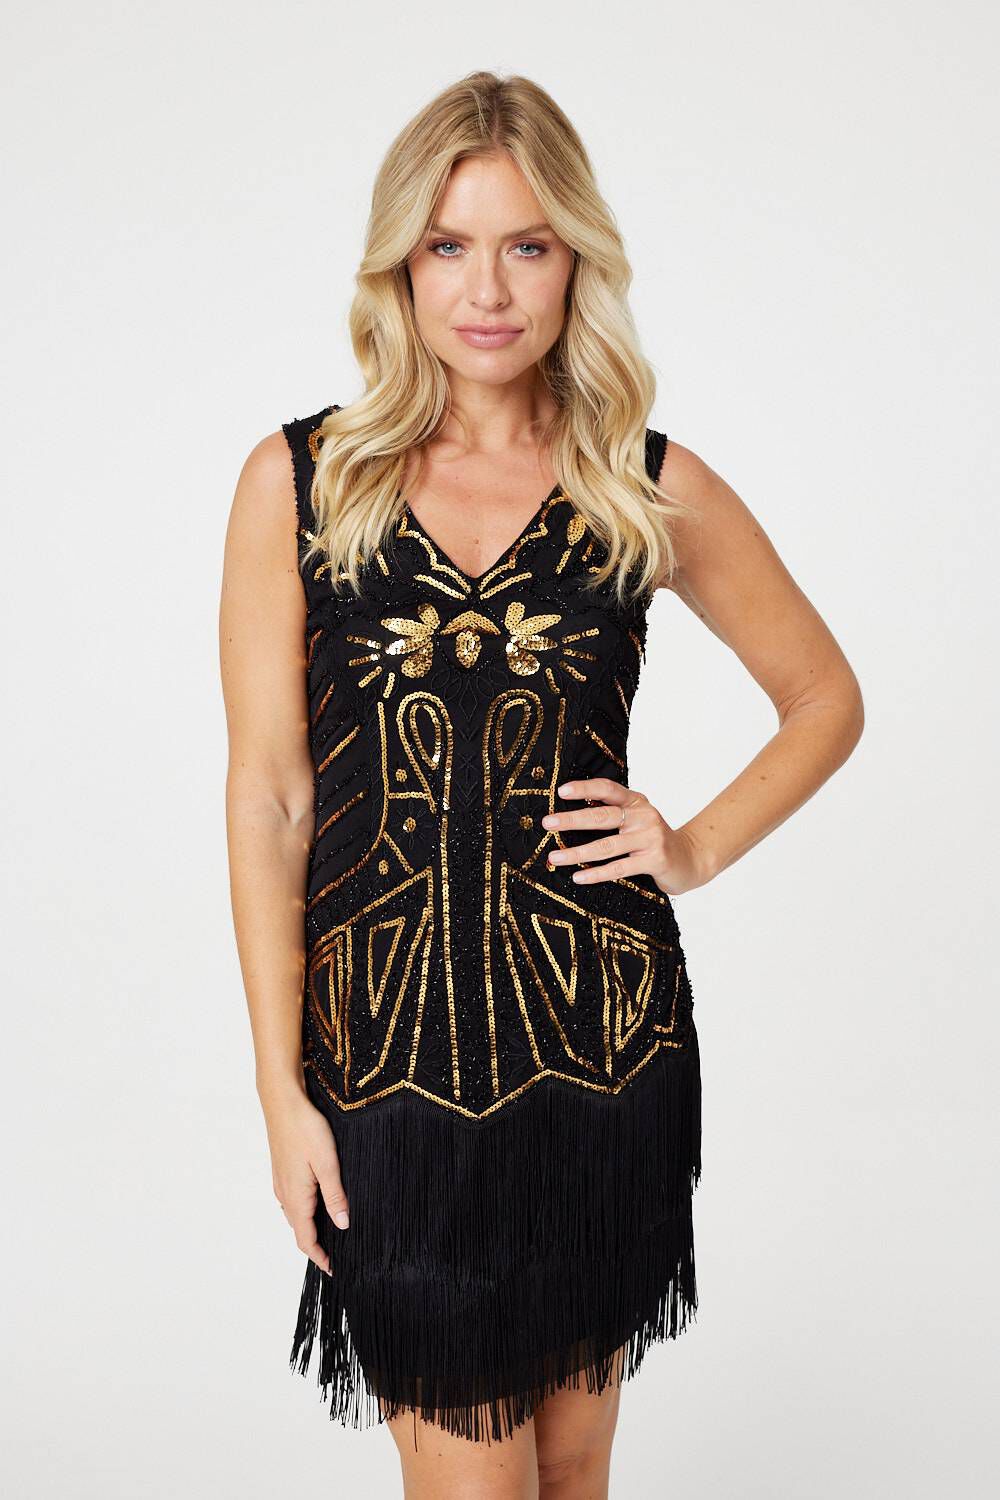 Izabel London Women’s Black and Gold Sequin Sleeveless Short Dress, Size: 12